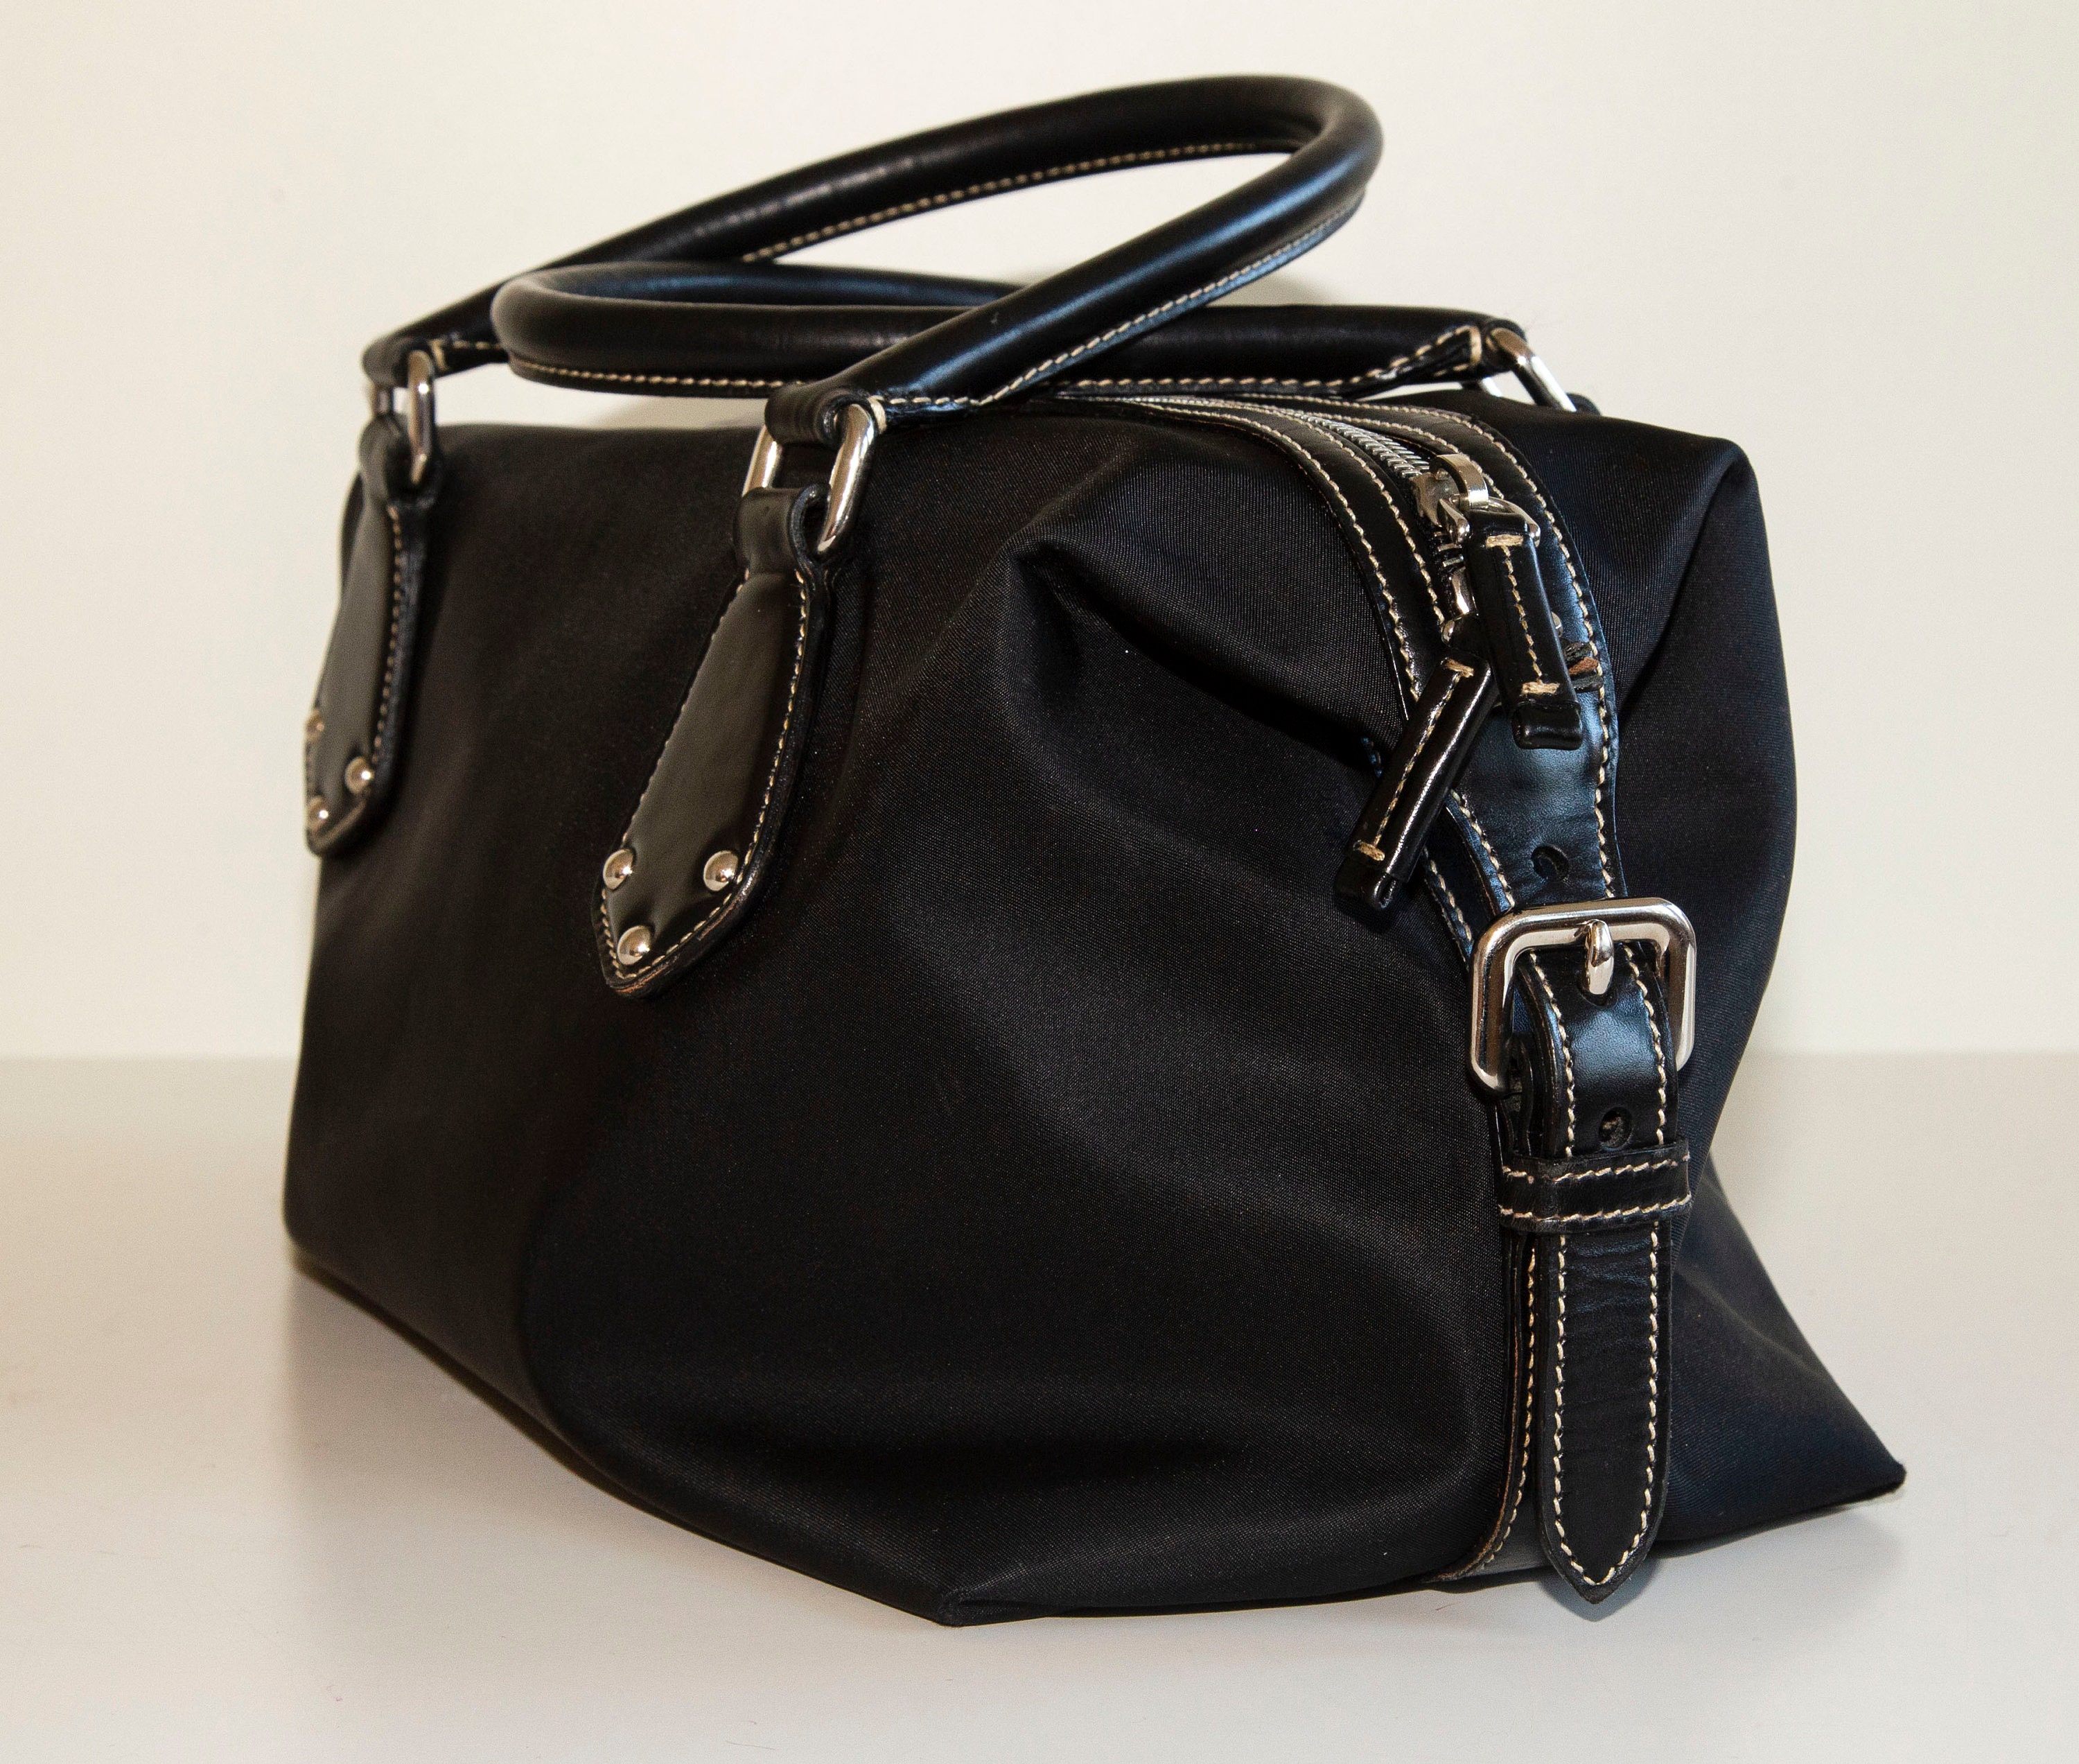 Prada Bowling Cross Body Bag Black in Nylon/Leather with Silver